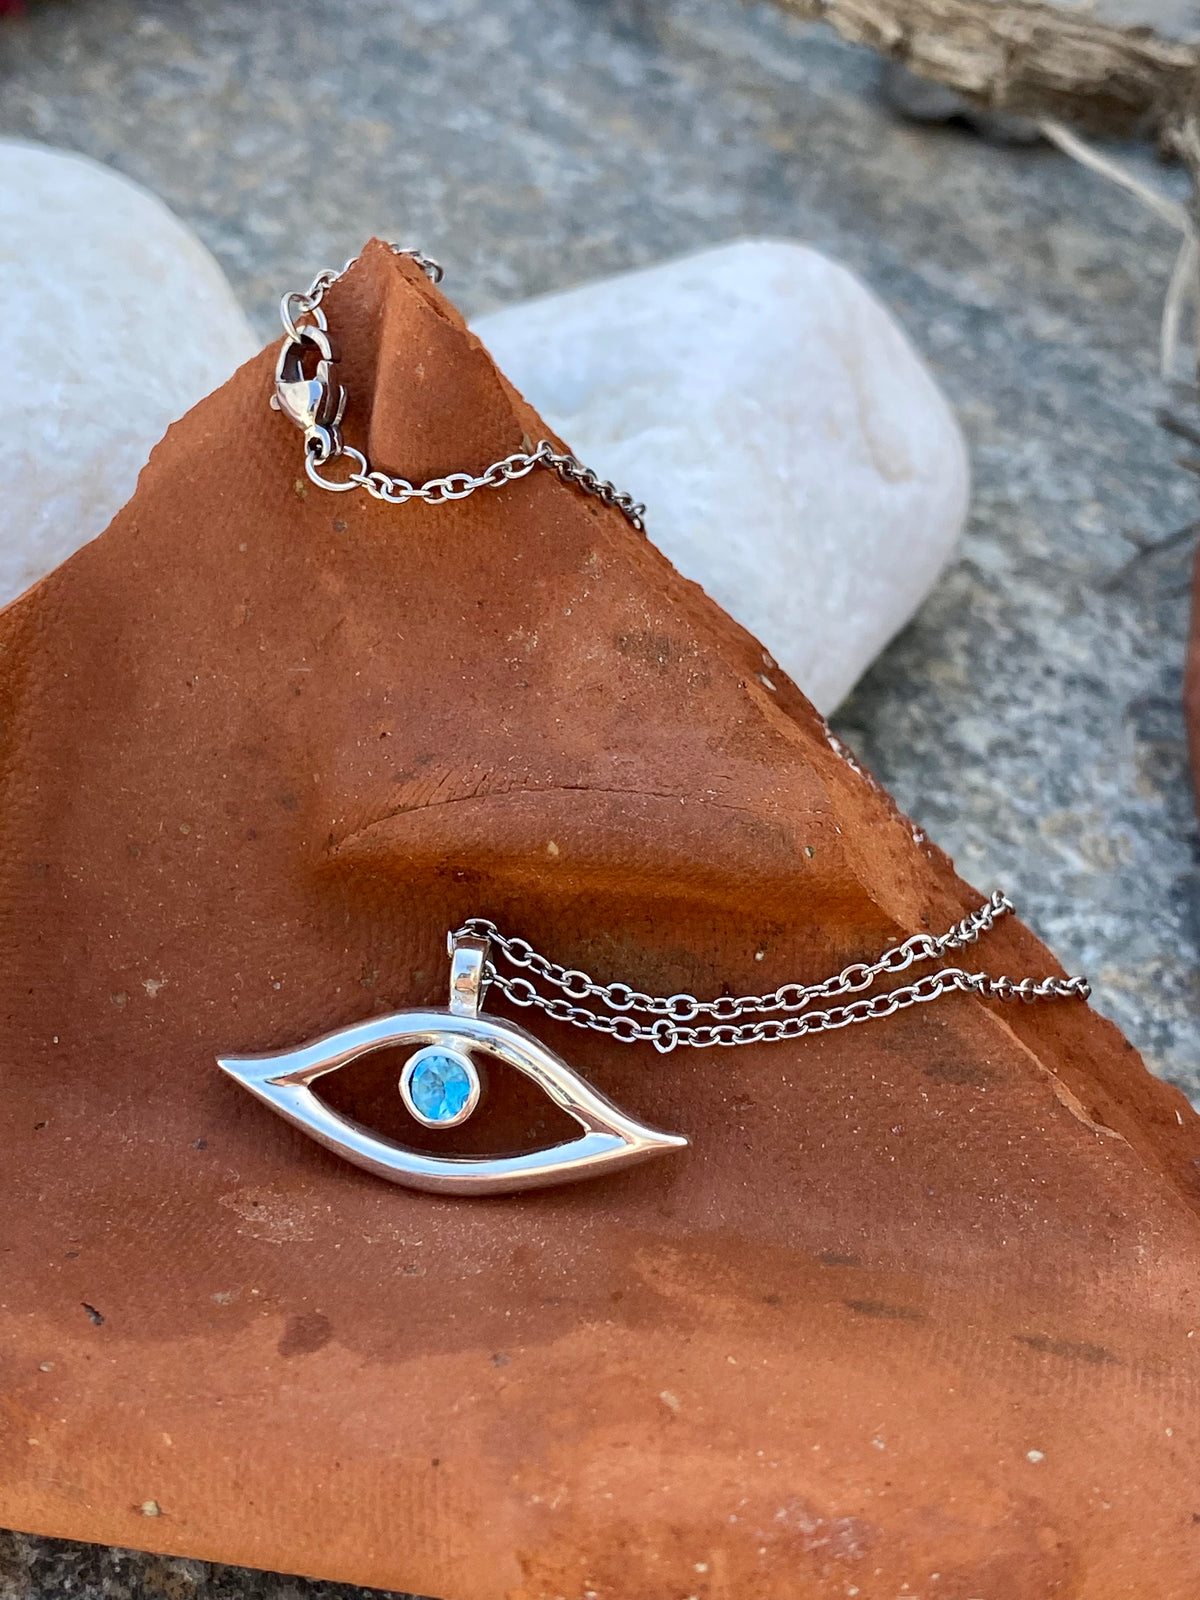 evil eye necklace with blue topaz gemstone